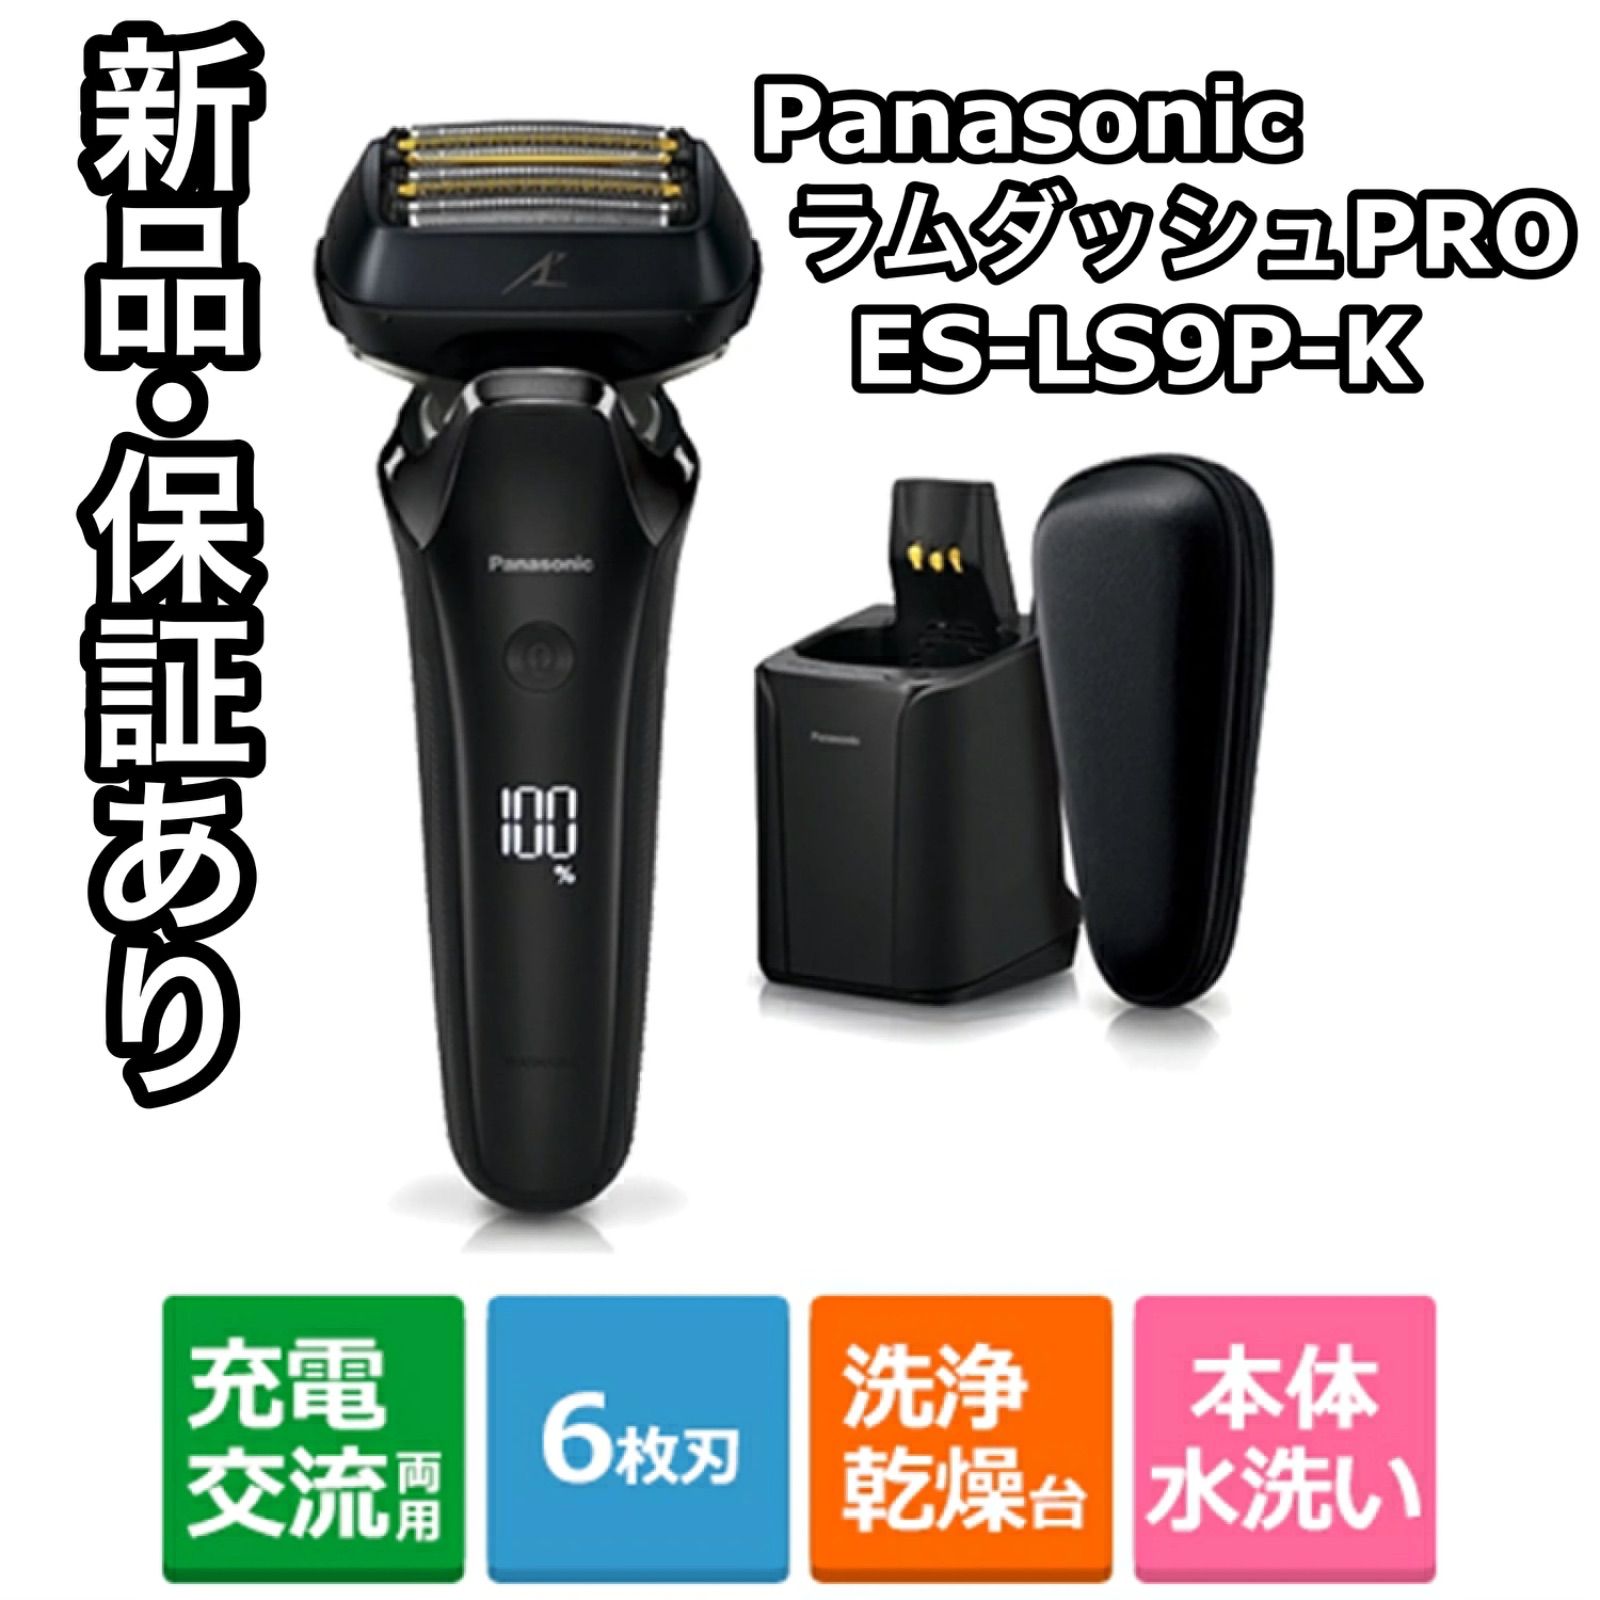 上質 Panasonic ES-LS9P-K BLACK dinter.com.hn